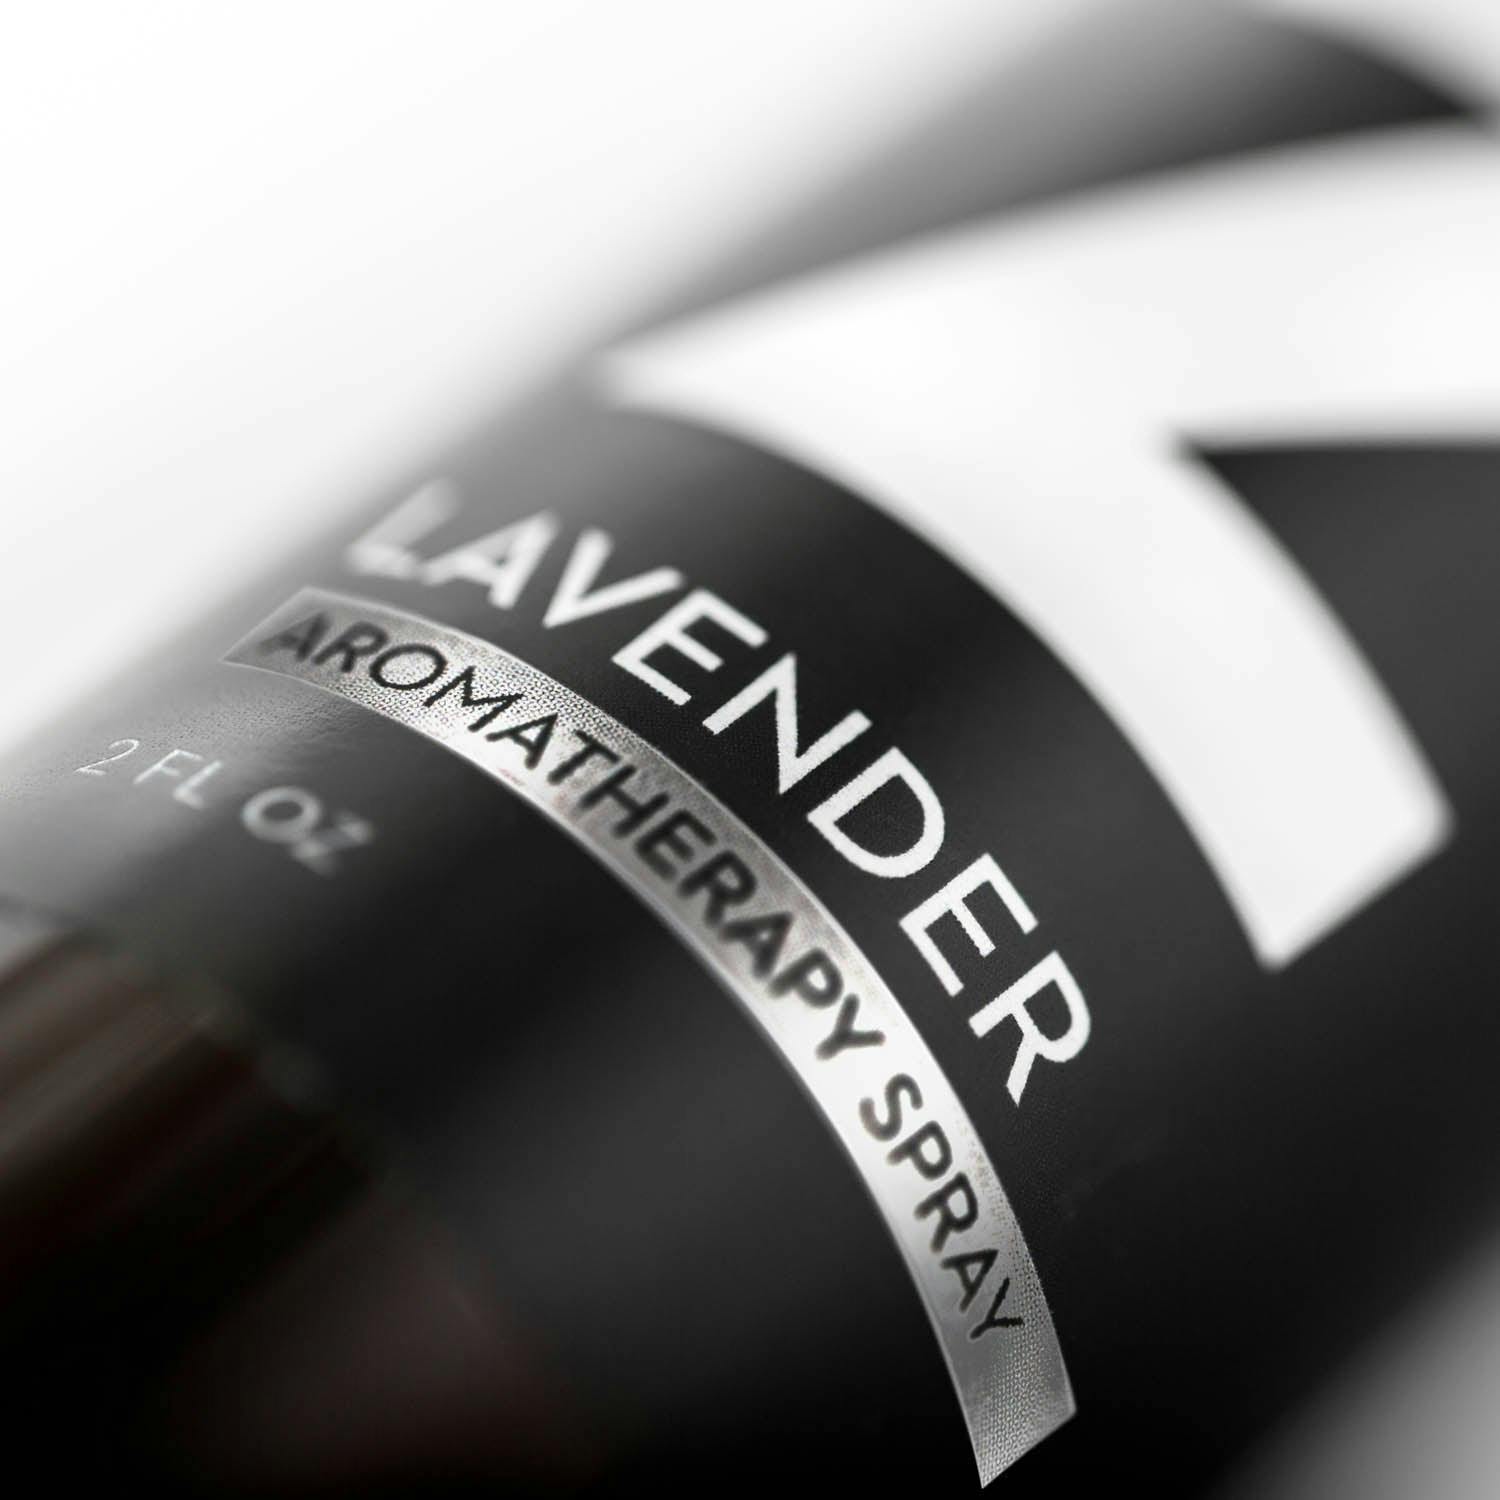 Lavender Sleep spray label - angled view - thumbnail